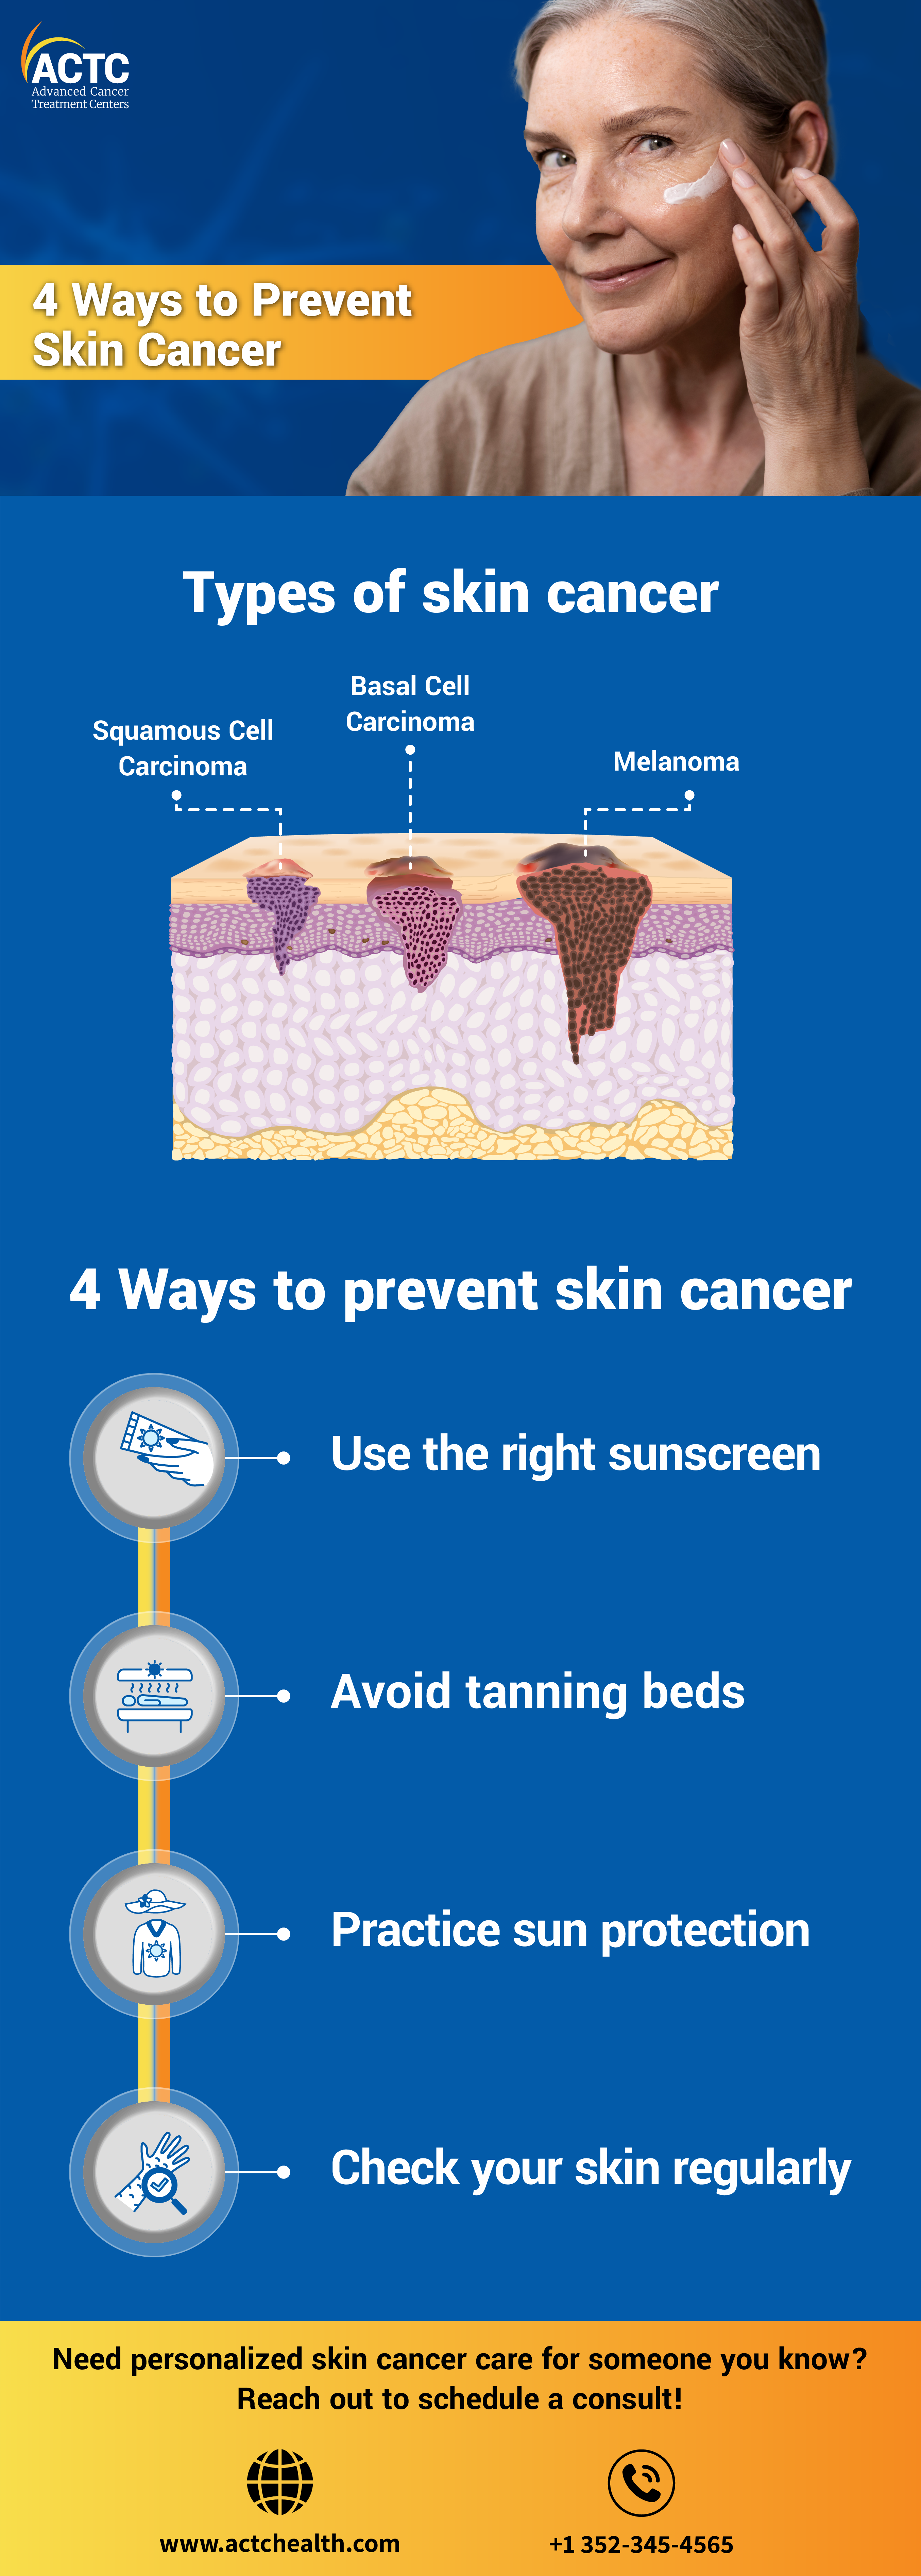 Understanding the risk of skin cancer